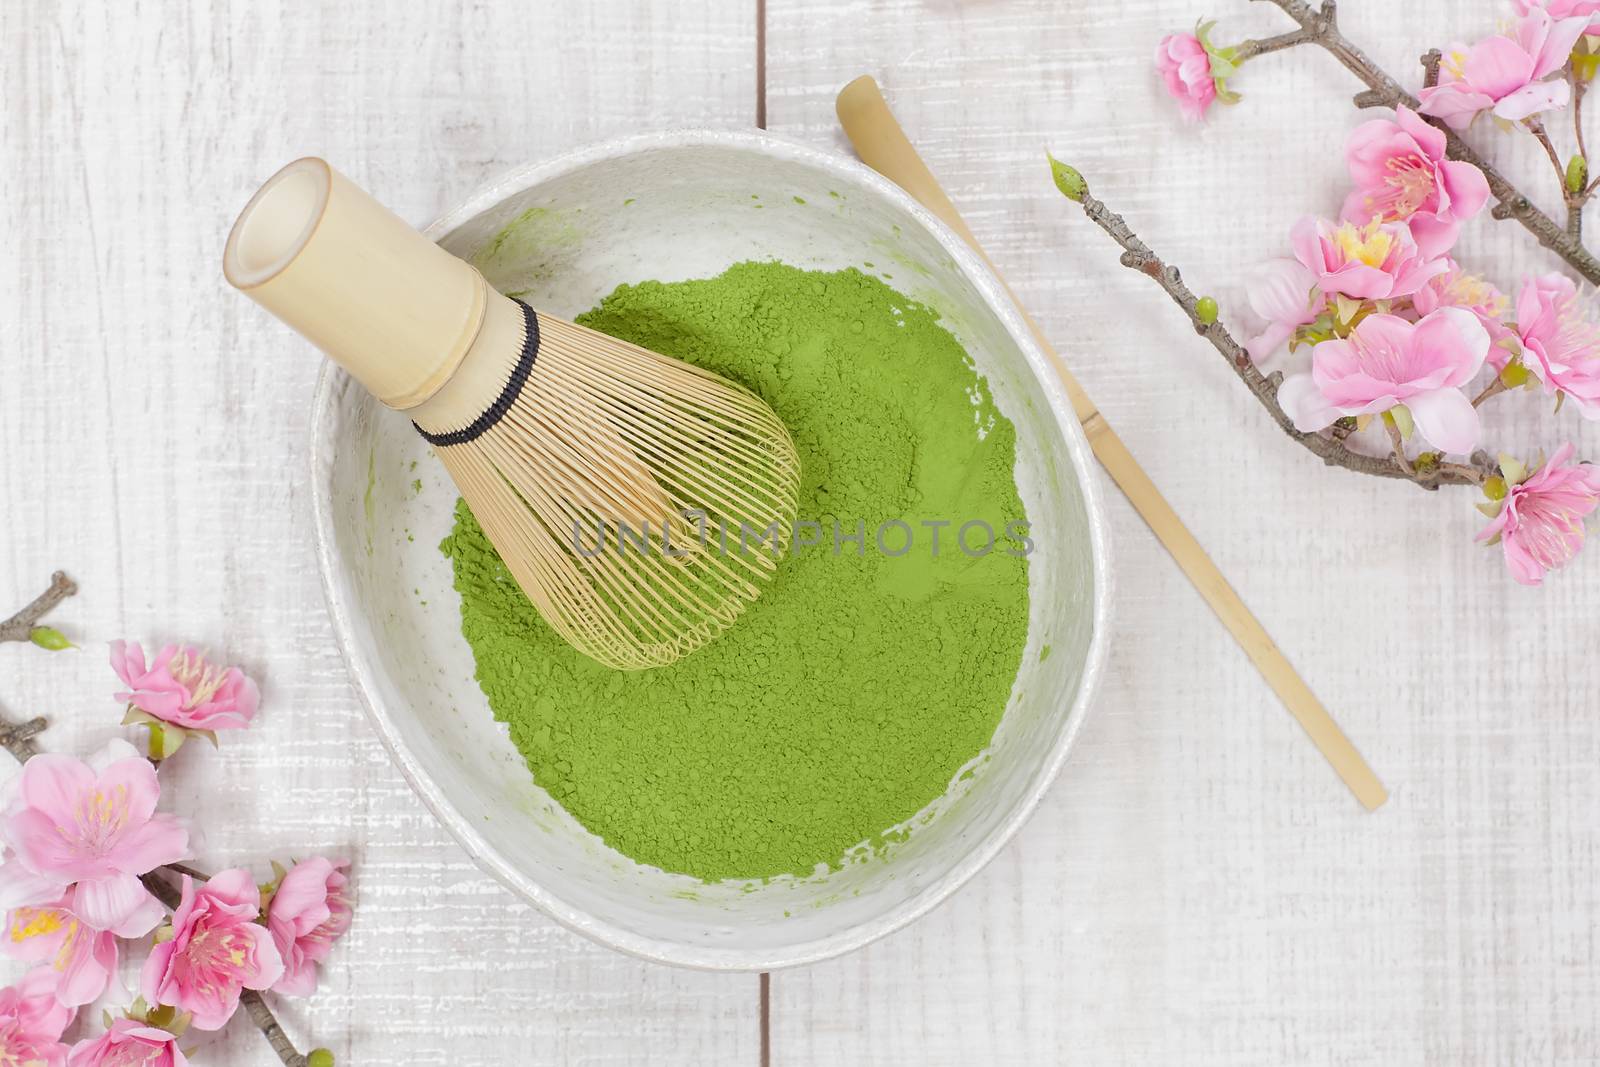 Still life with green matcha tea powder and bamboo whisk. Japanese Tea Ceremony: Preparation of matcha powdered green tea